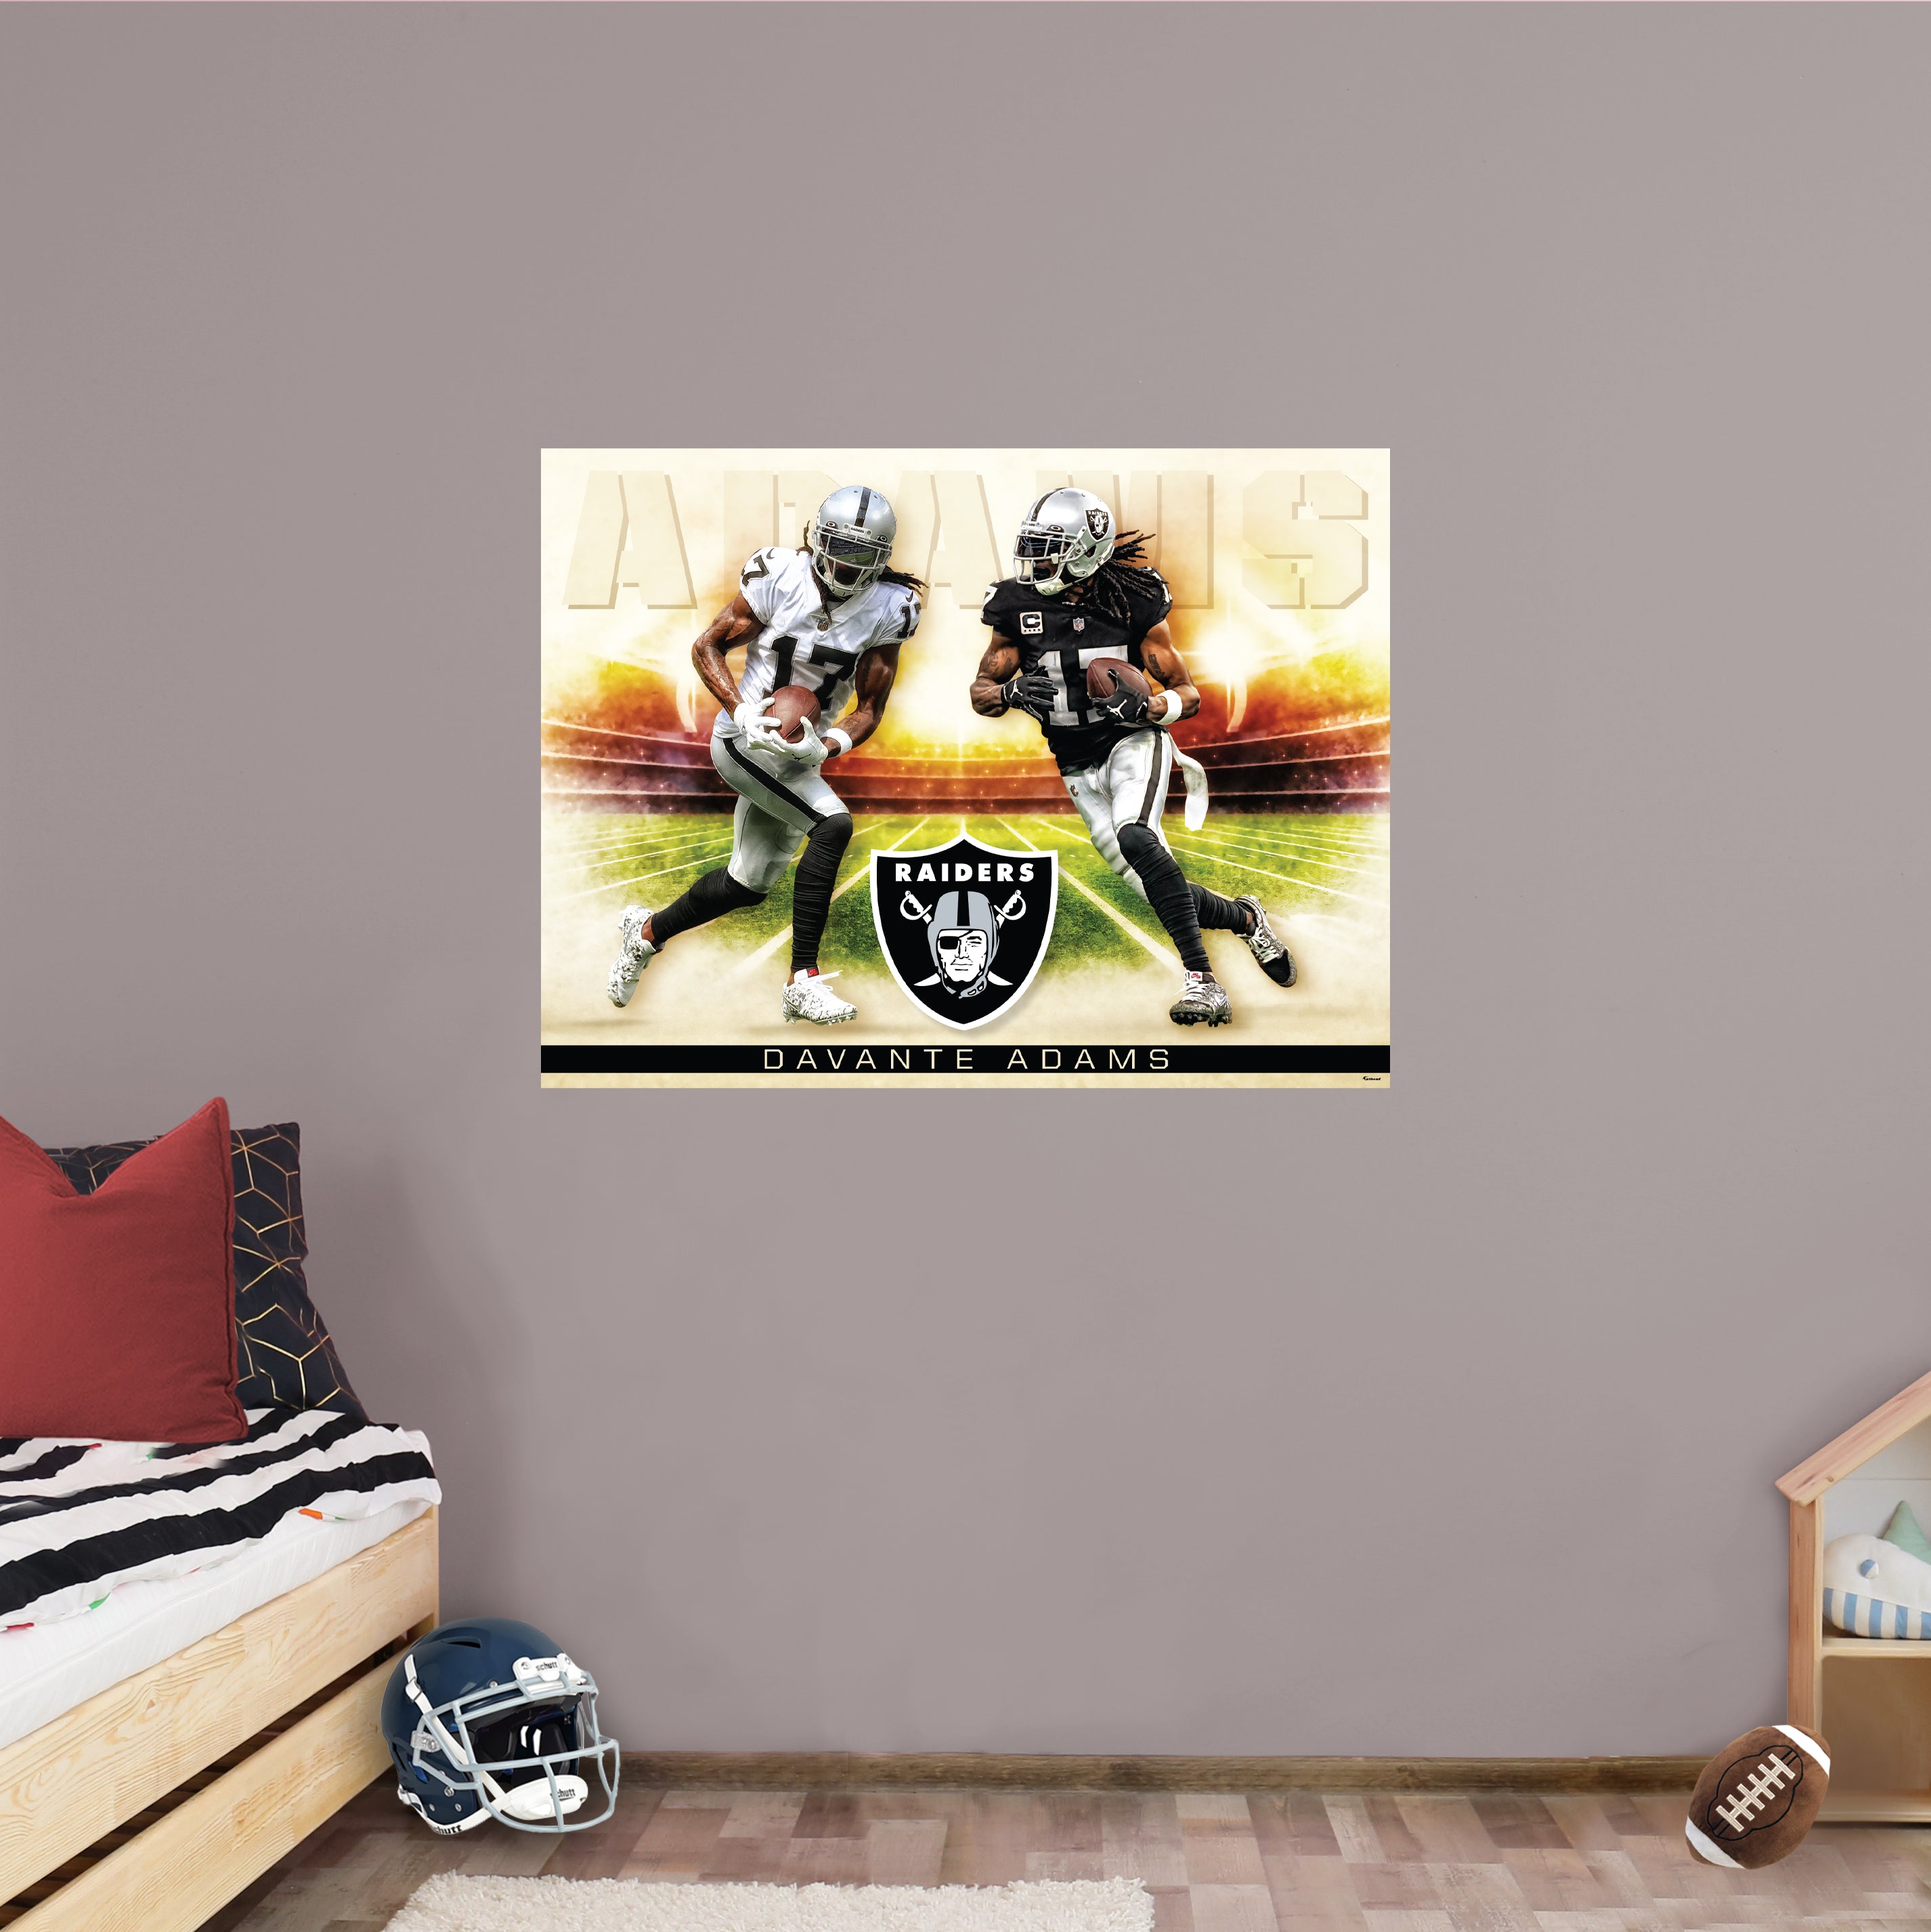 Las Vegas Raiders Football 5 pcs Painting Printed Canvas Wall Art Home Decor